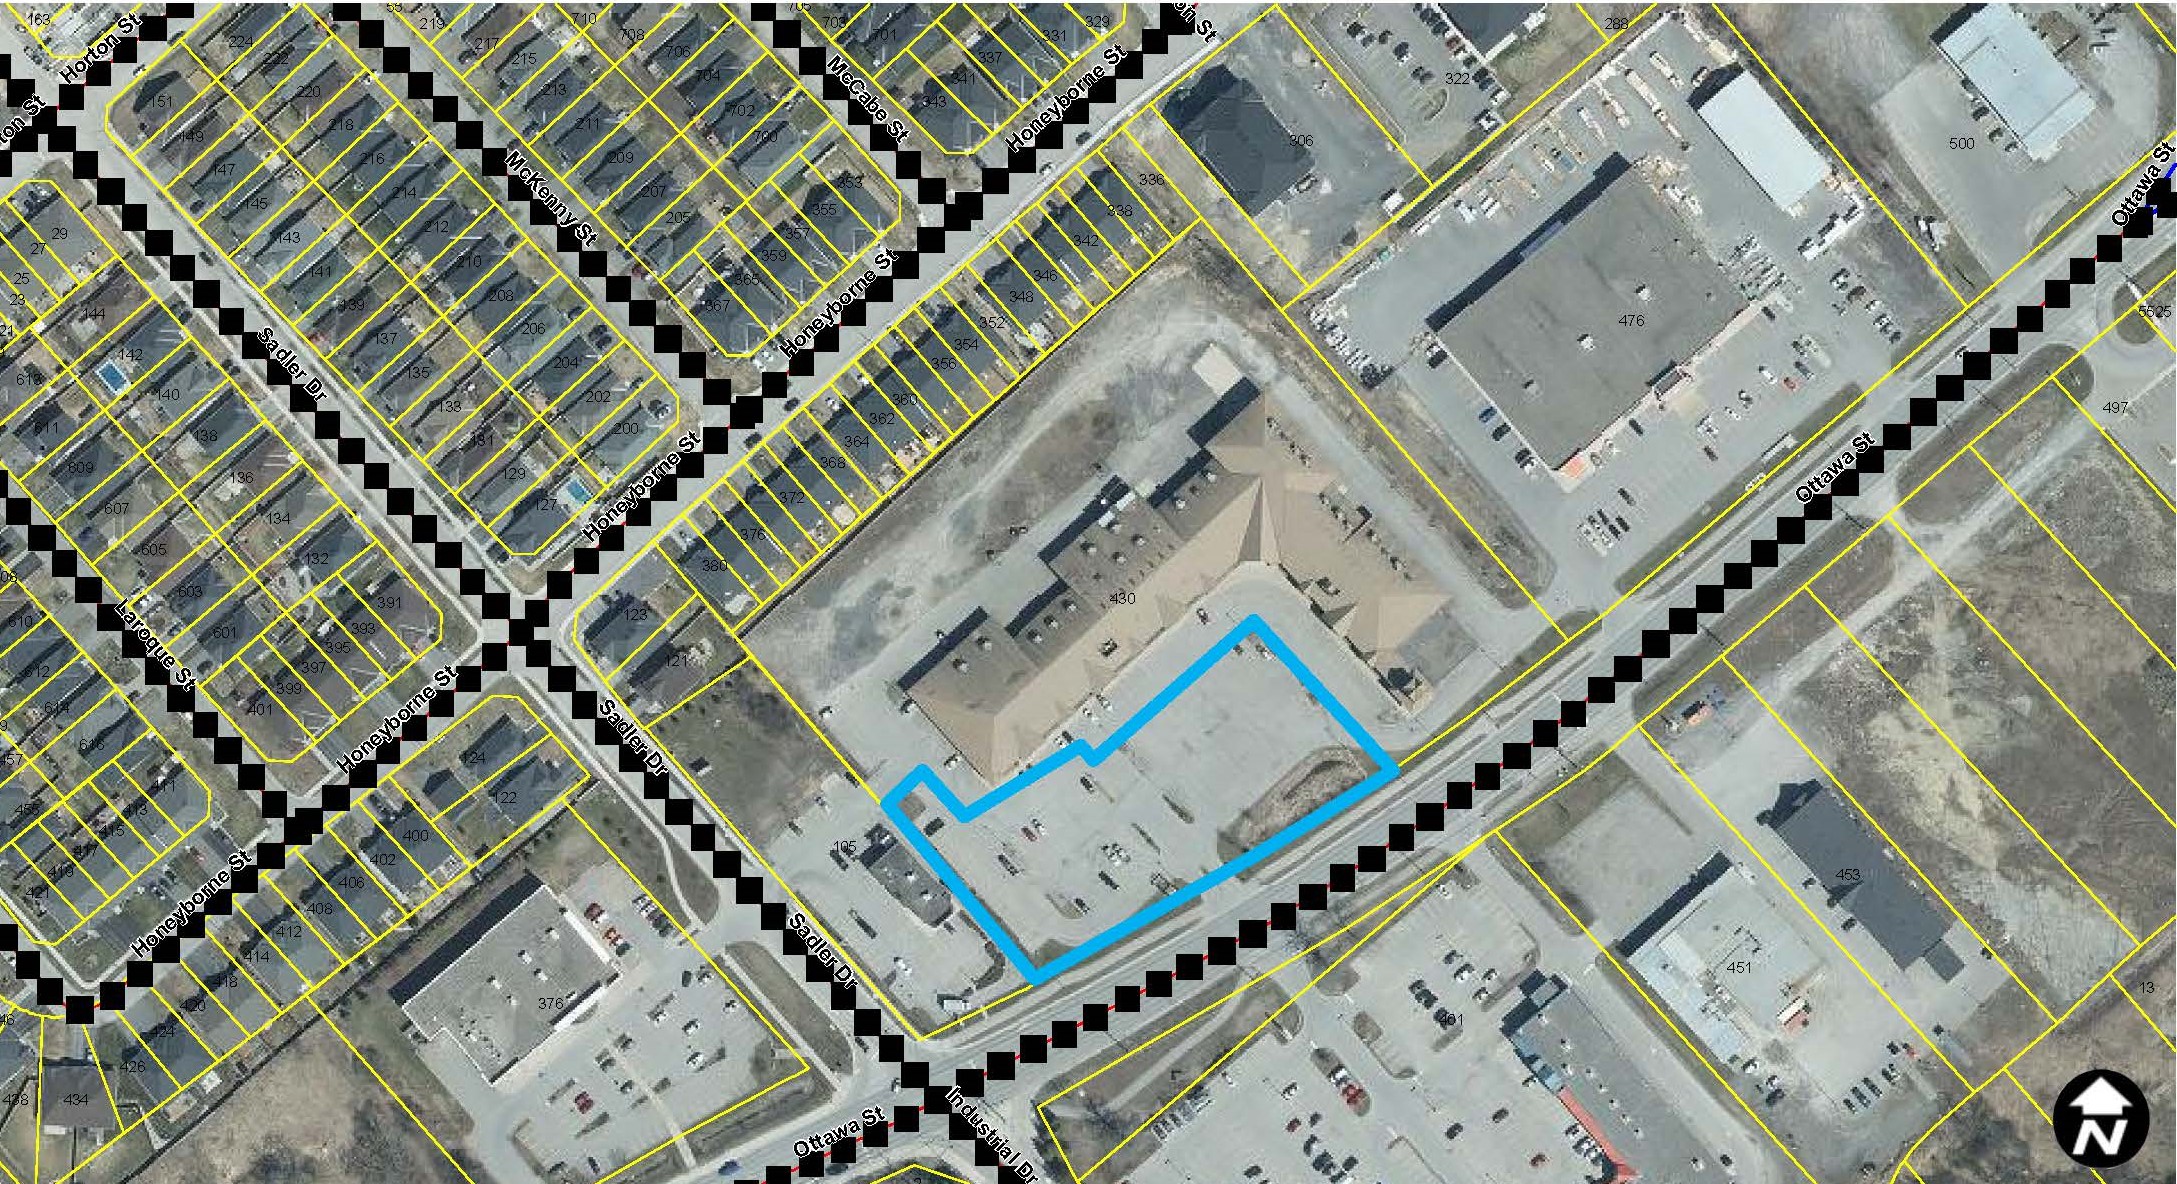 430 Ottawa Street satellite image